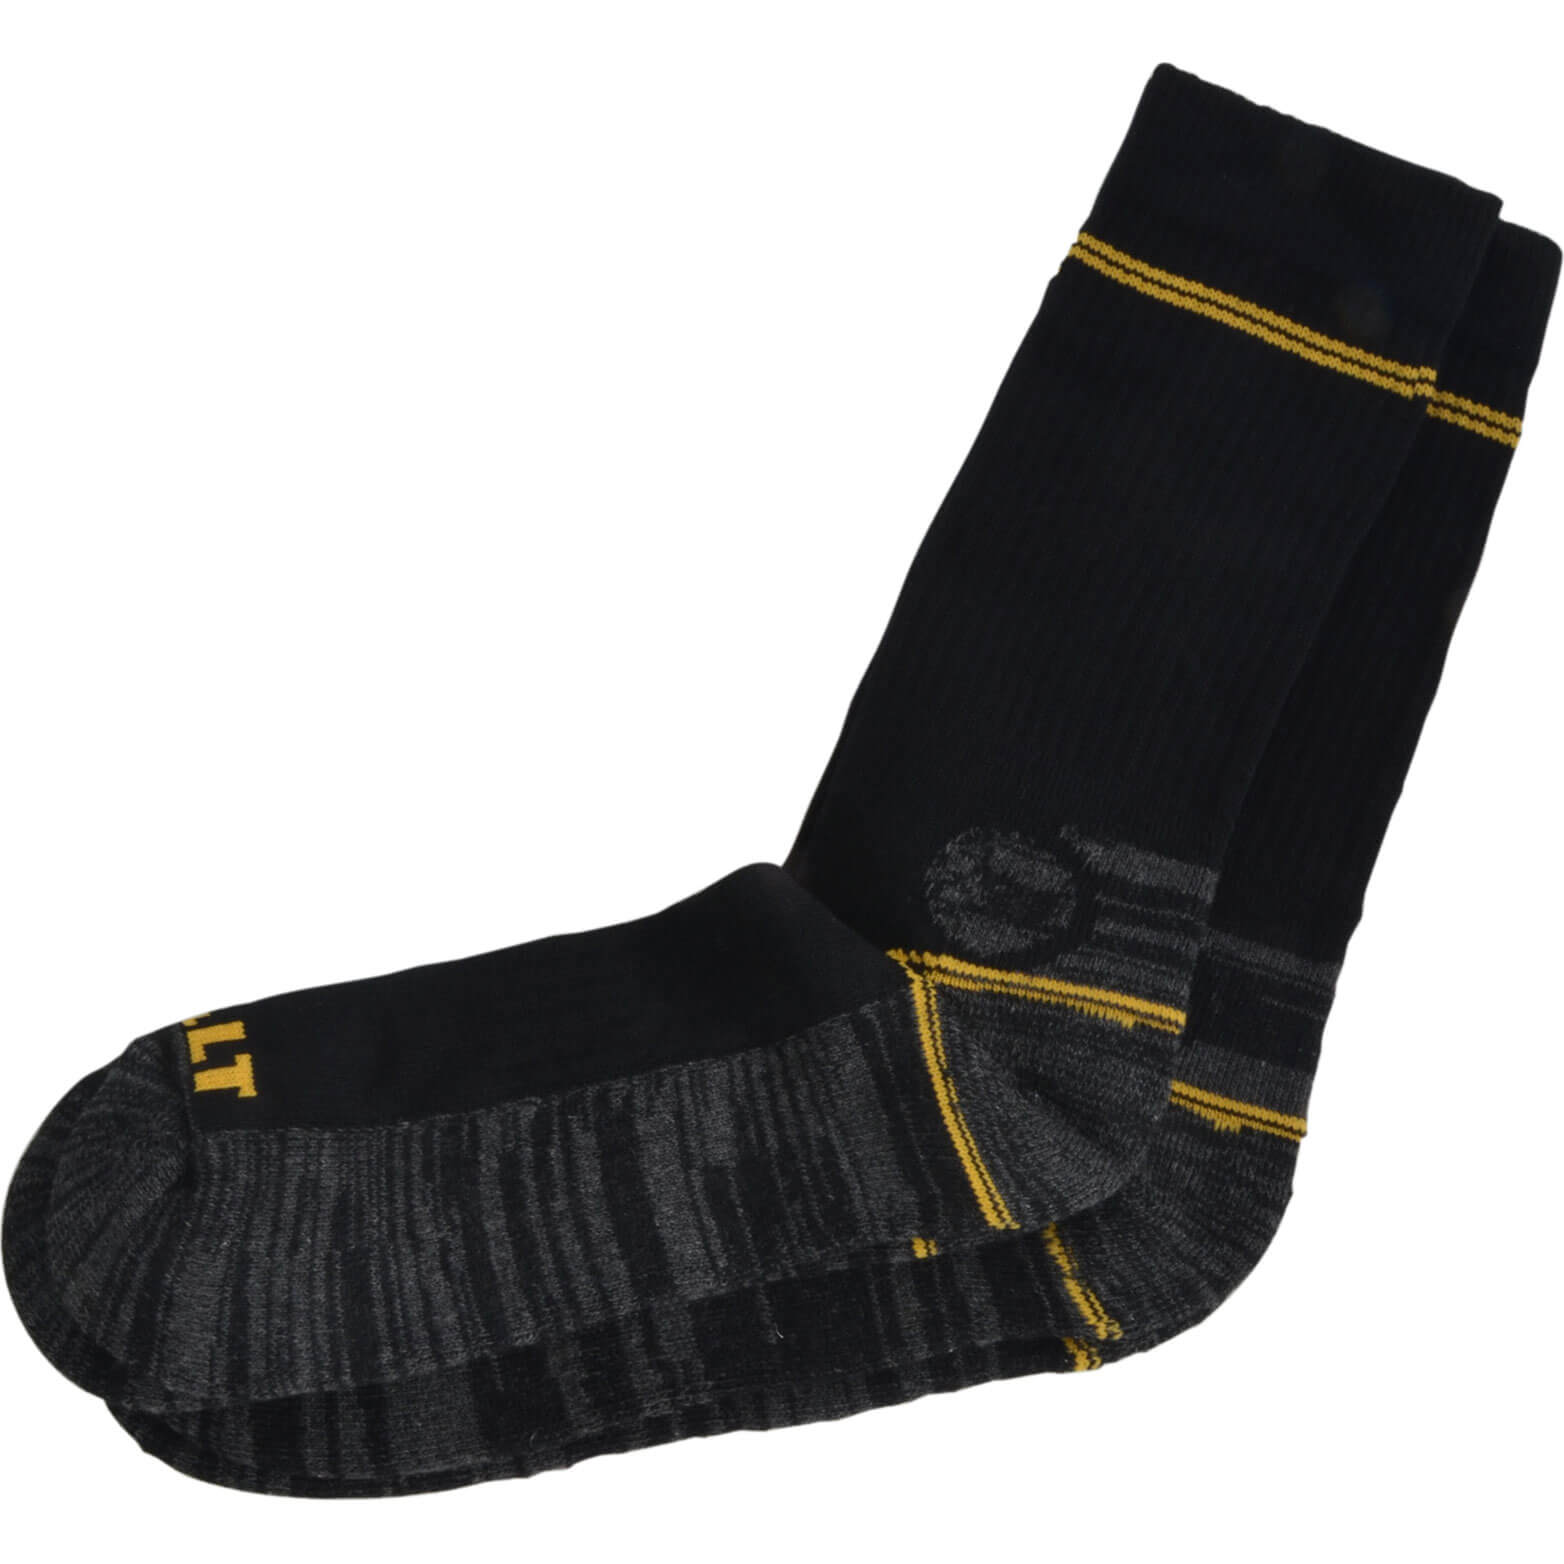 DeWalt Boots Socks 2 Pairs